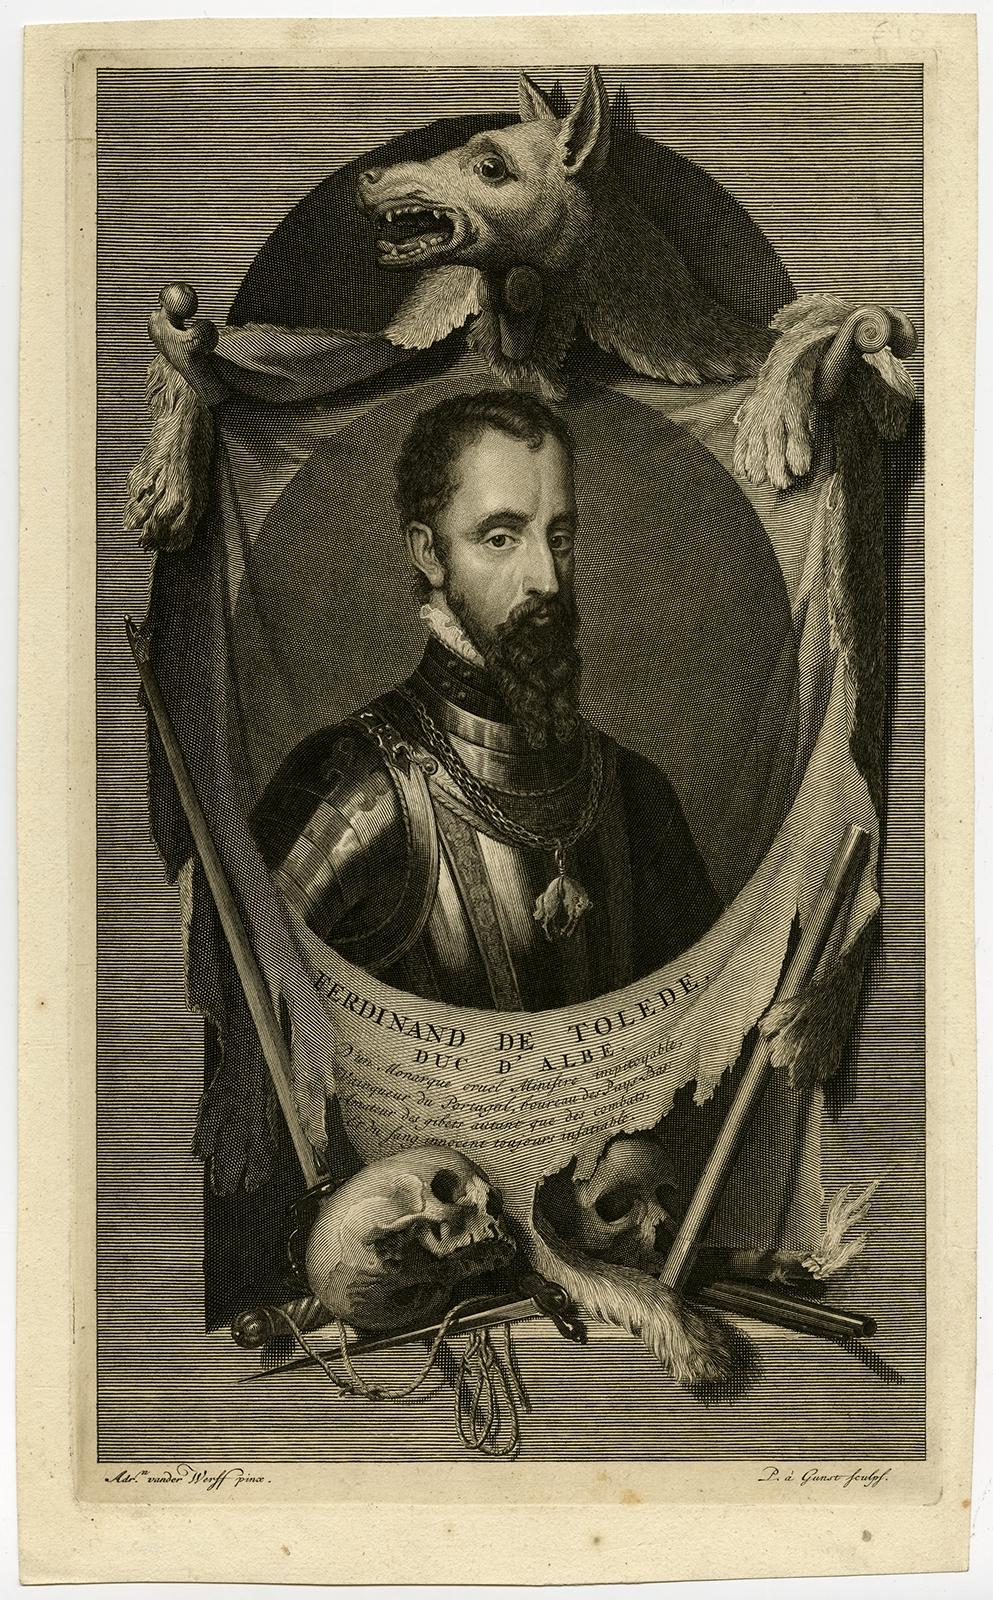 Antique print, titled: 'Ferdinand de Tolede. Duc d'Albe.' 

Portrait of Fernando Alvarez de Toledo y Pimentel, Grand duke of Alba (1507-1582). Source unknown, to be determined.

Fernando Álvarez de Toledo y Pimentel, 3rd Duke of Alba (29 October